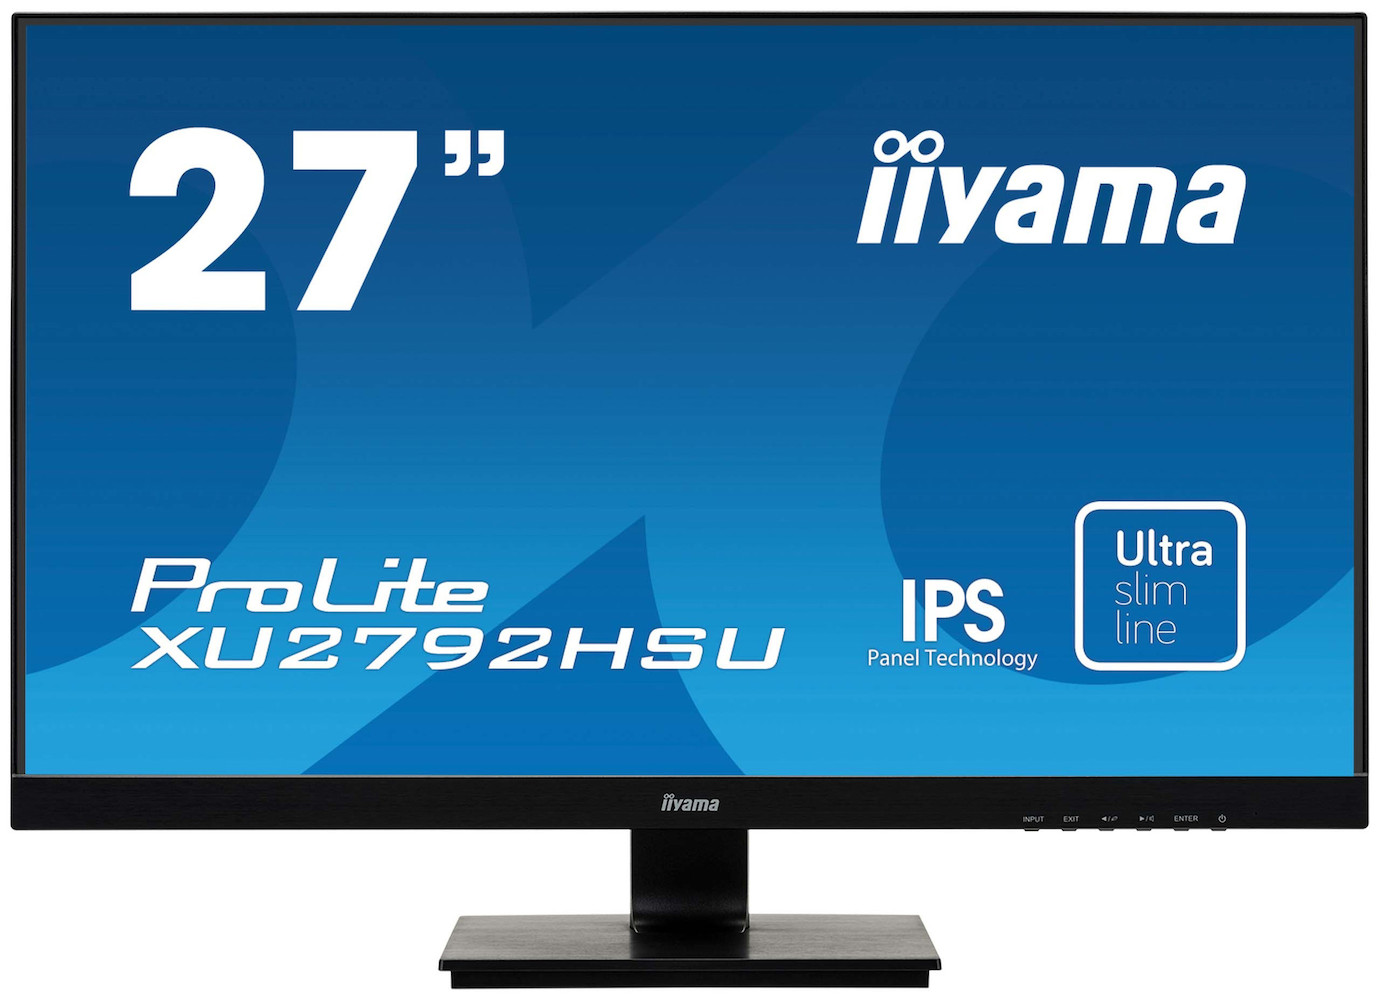 iiyama PROLITE XU2792HSU-B1 27'' Businessmonitor mit 4ms und Full HD